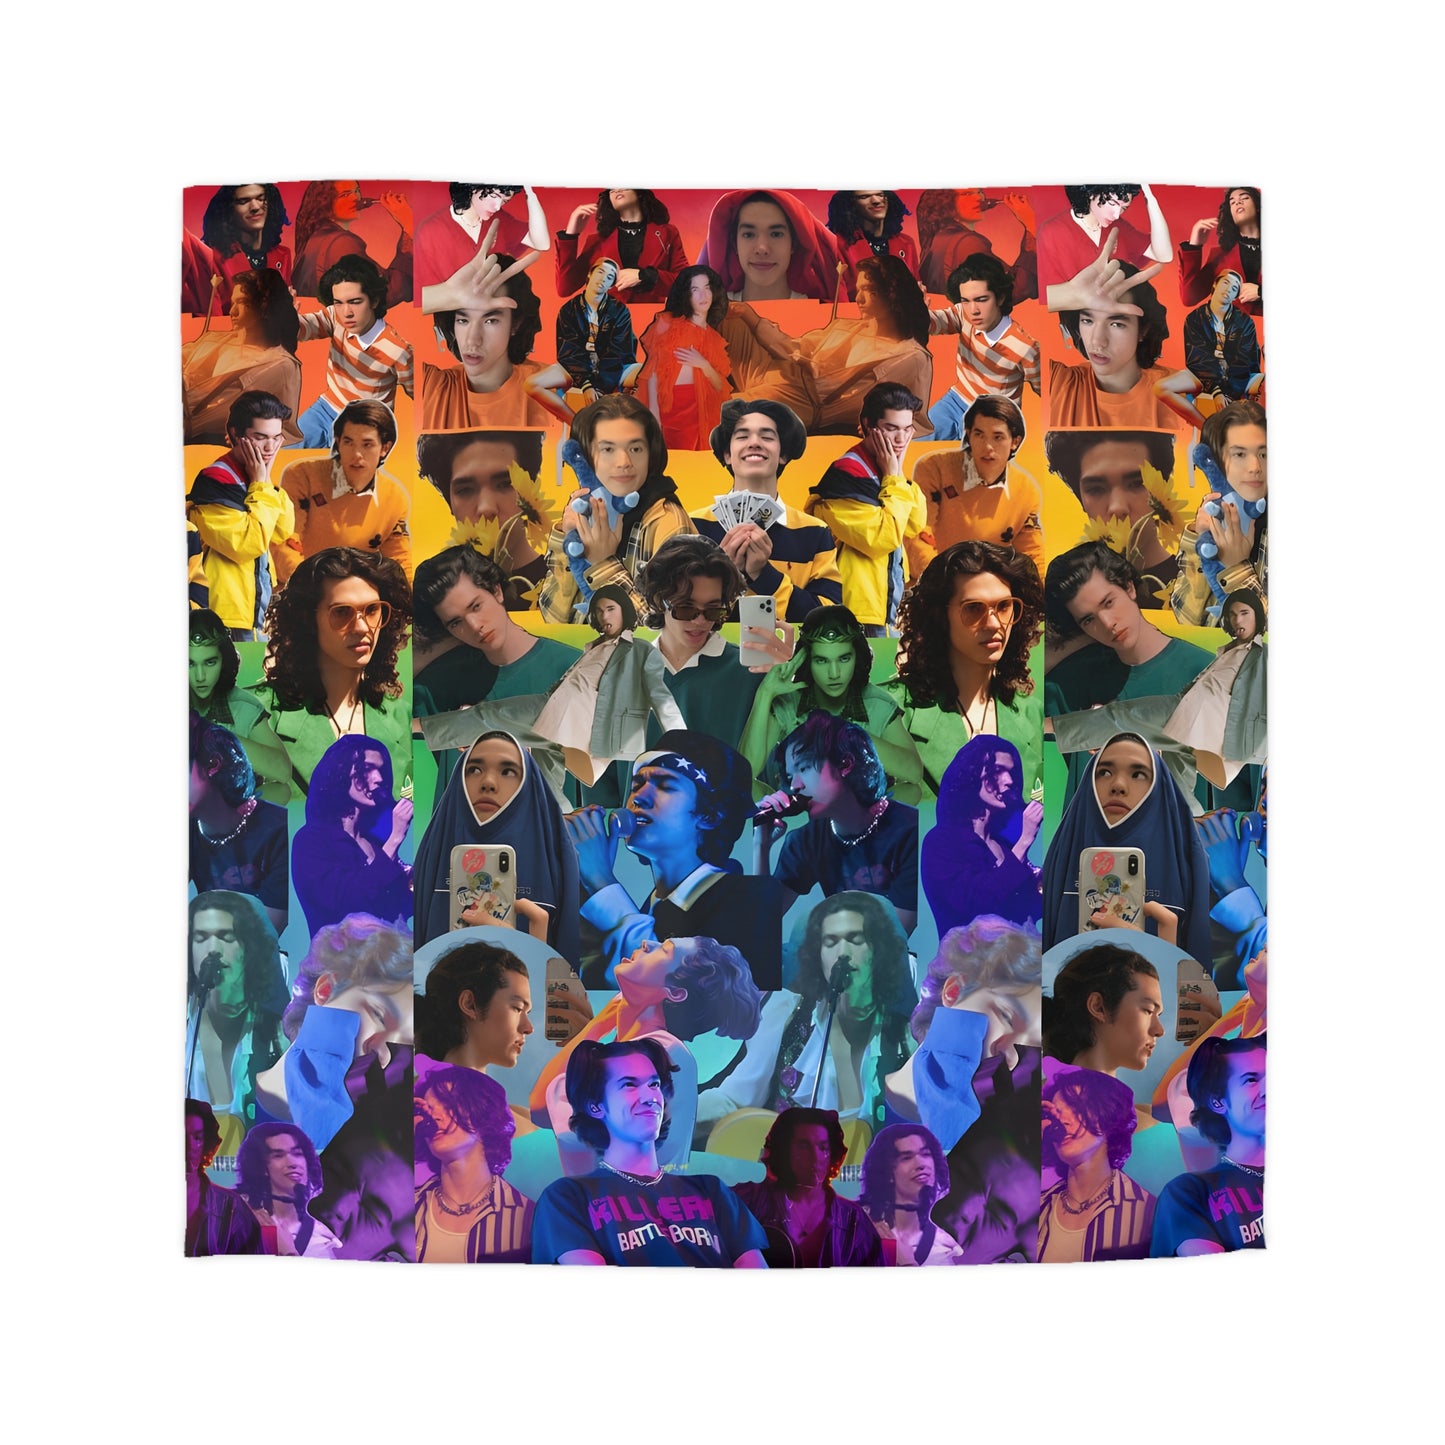 Conan Grey Rainbow Photo Collage Microfiber Duvet Cover